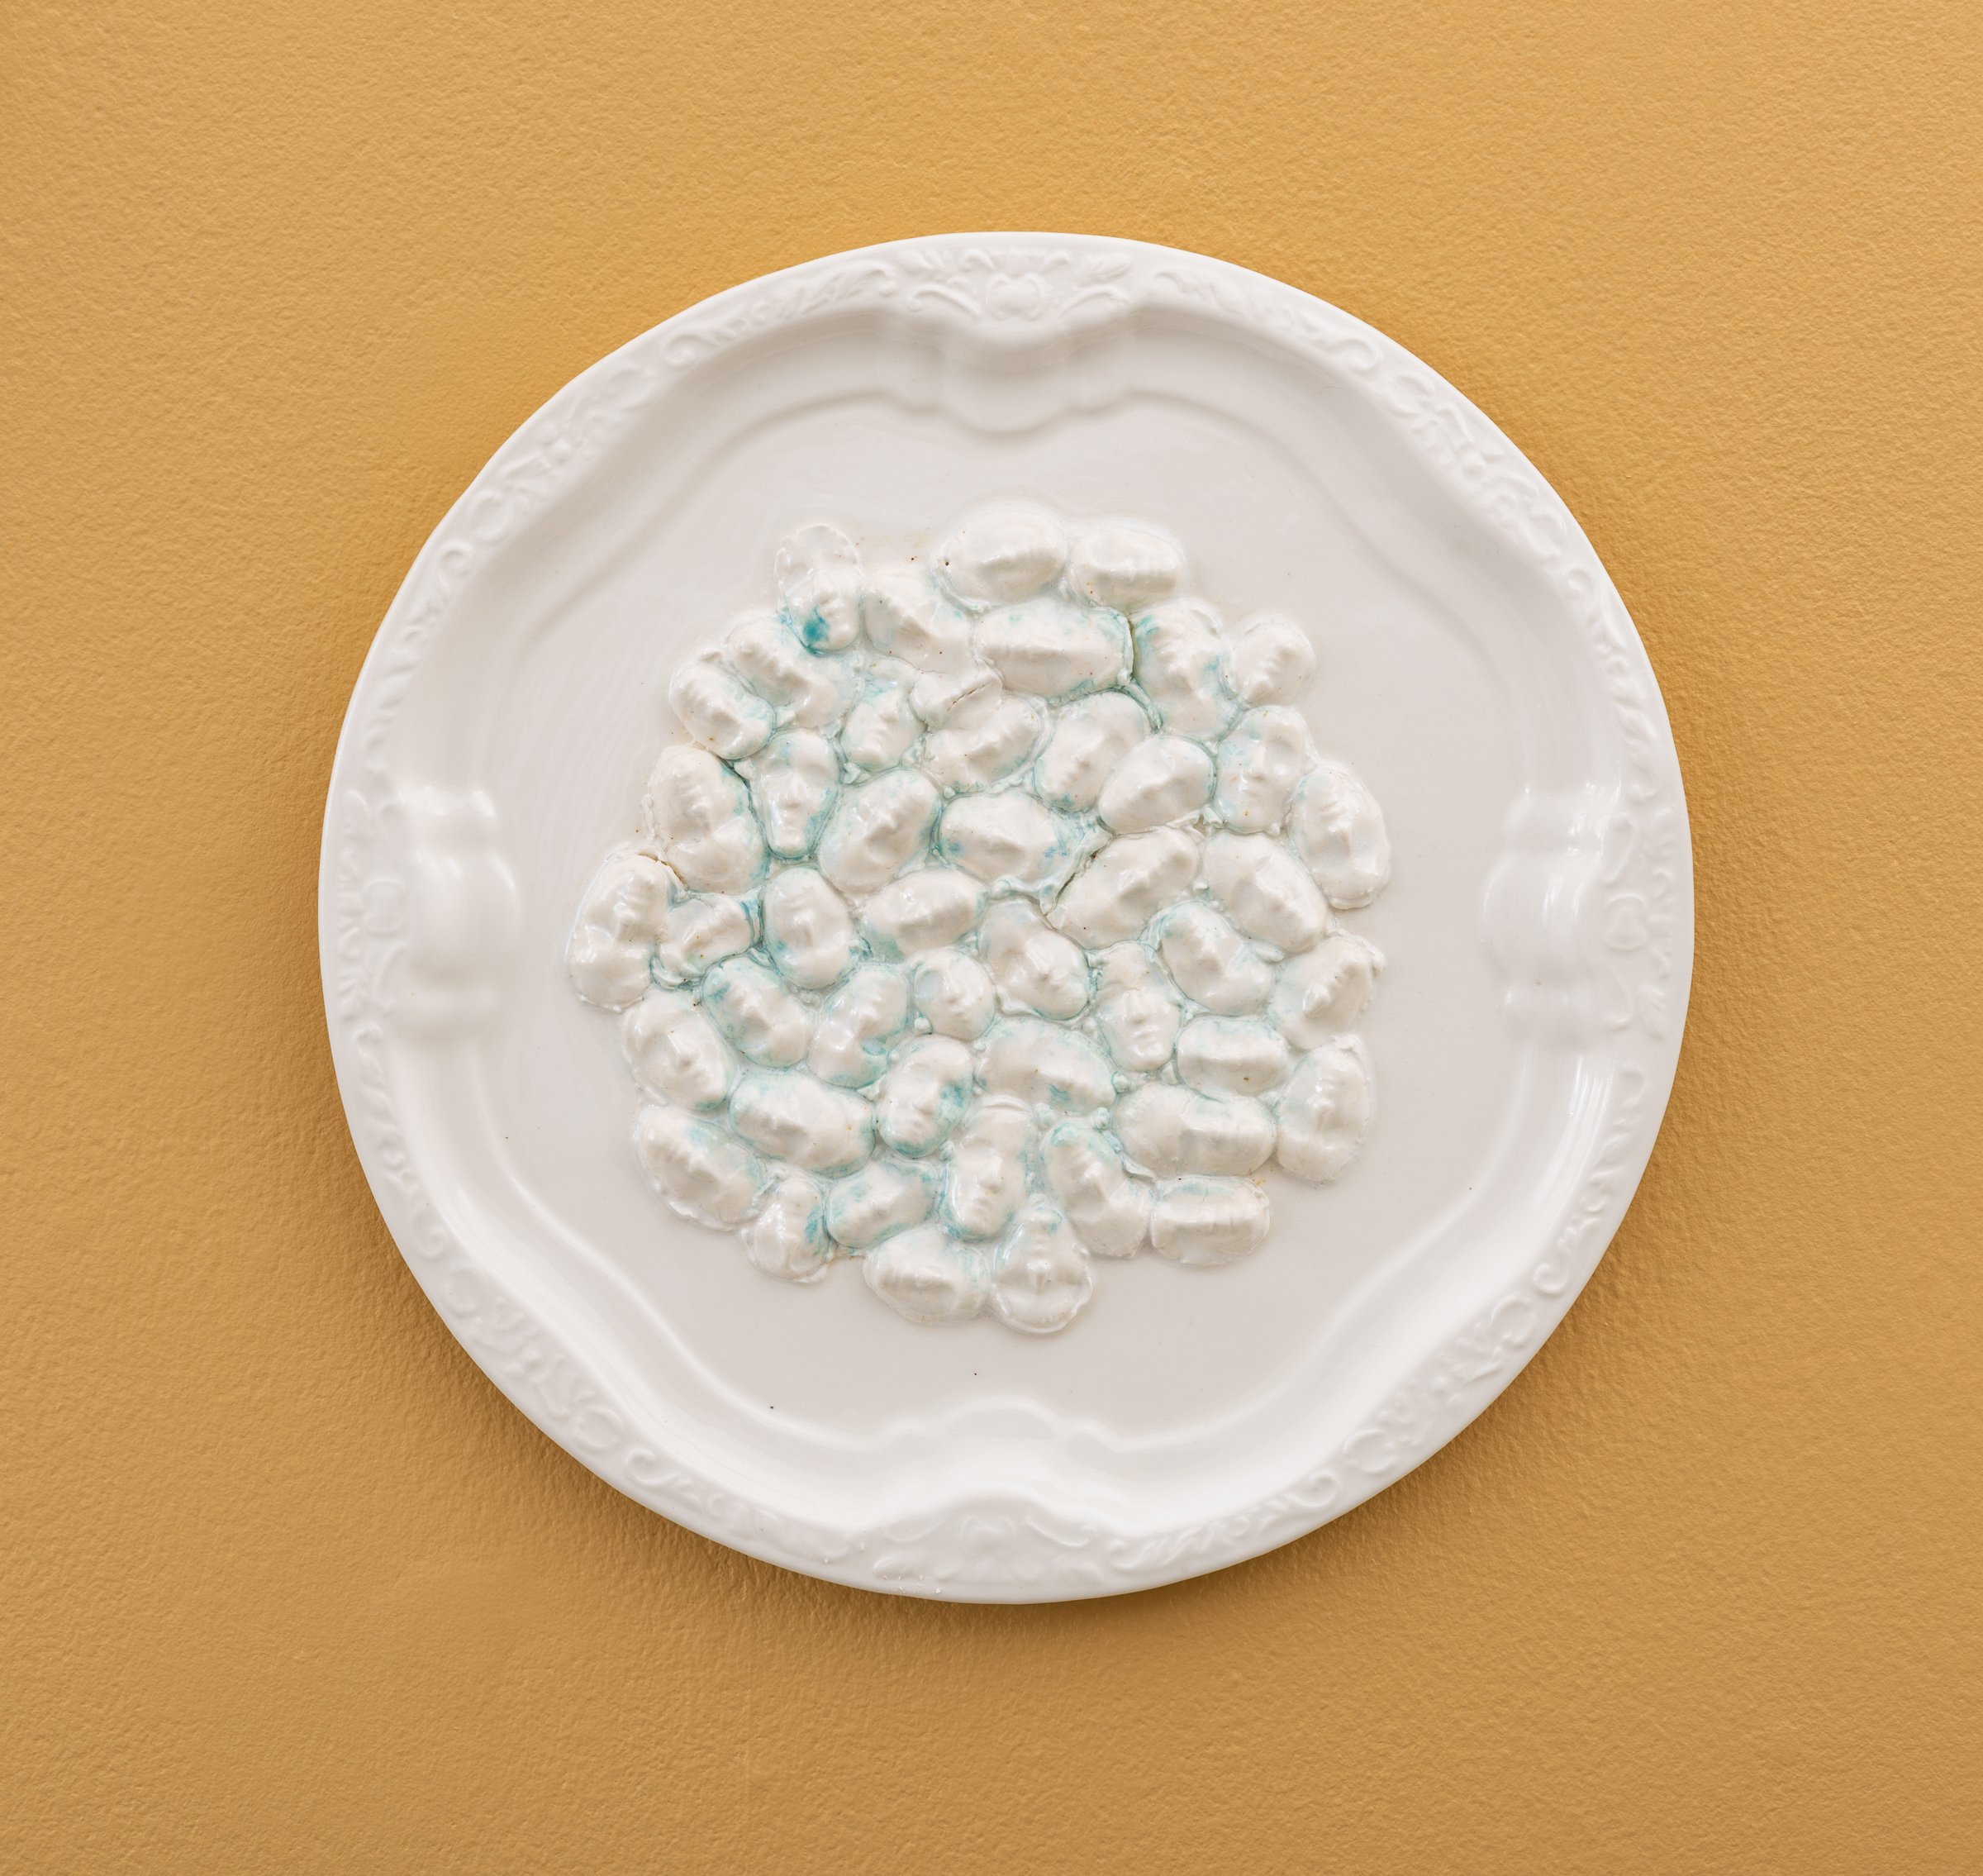  Why do Europeans put plates on their walls? XVIII | 2022  Porcelain, glazes, porcelain decals and tissue paper, press molding. 27x27x2cm  Photo: Thomas Tveter 